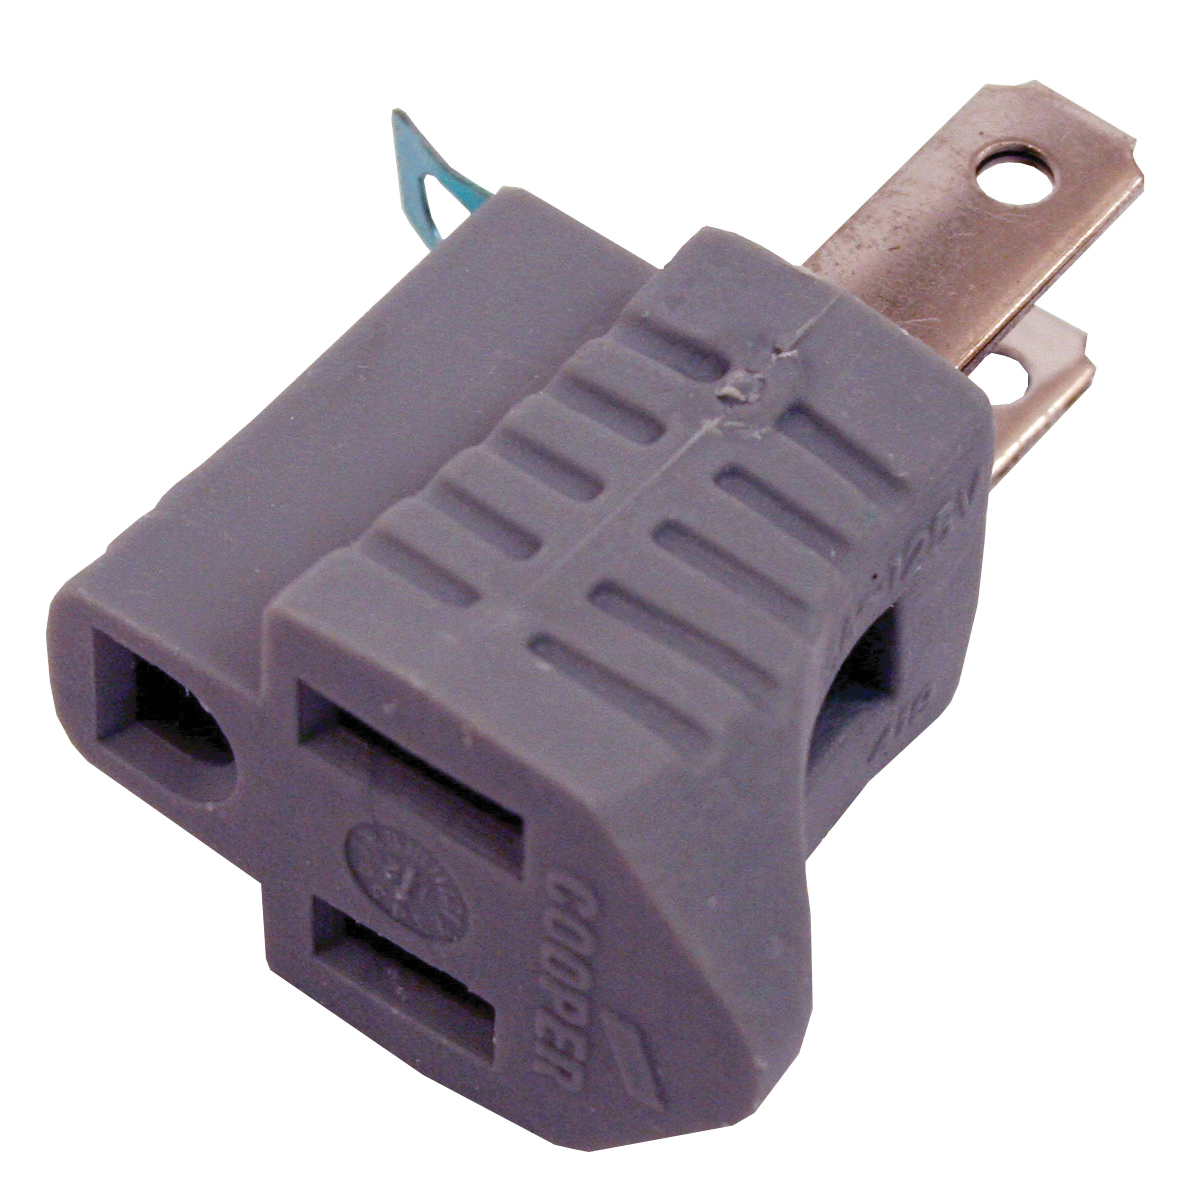 Bramec® 8525 3 to 2 Wire Adapter